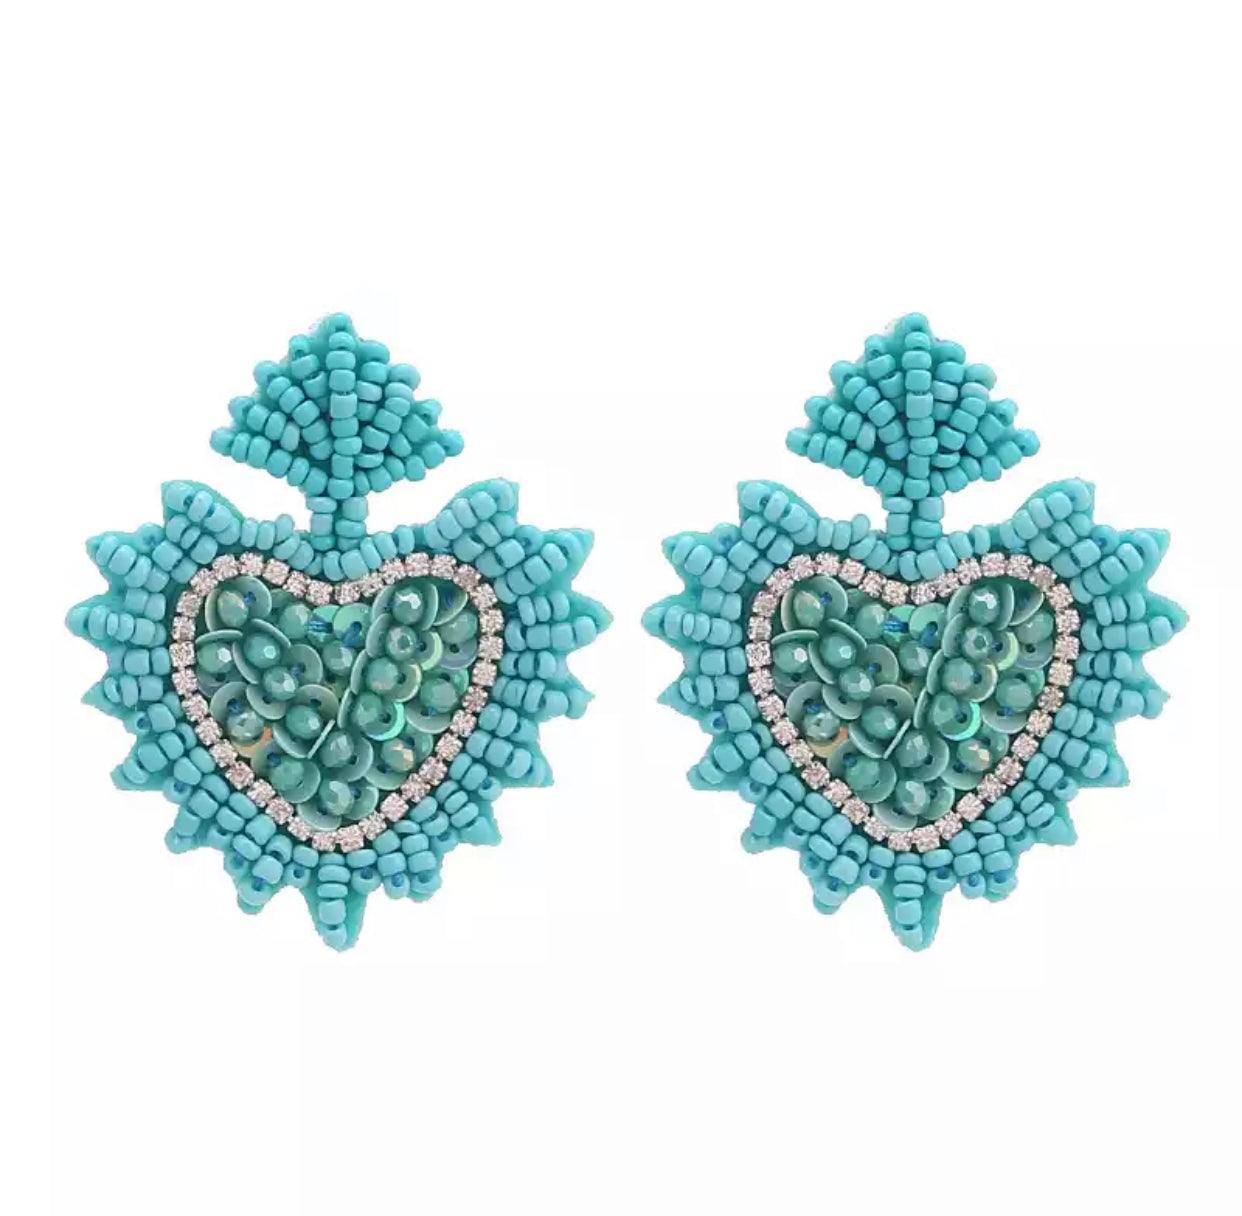 Hand beaded turquoise heart earrings